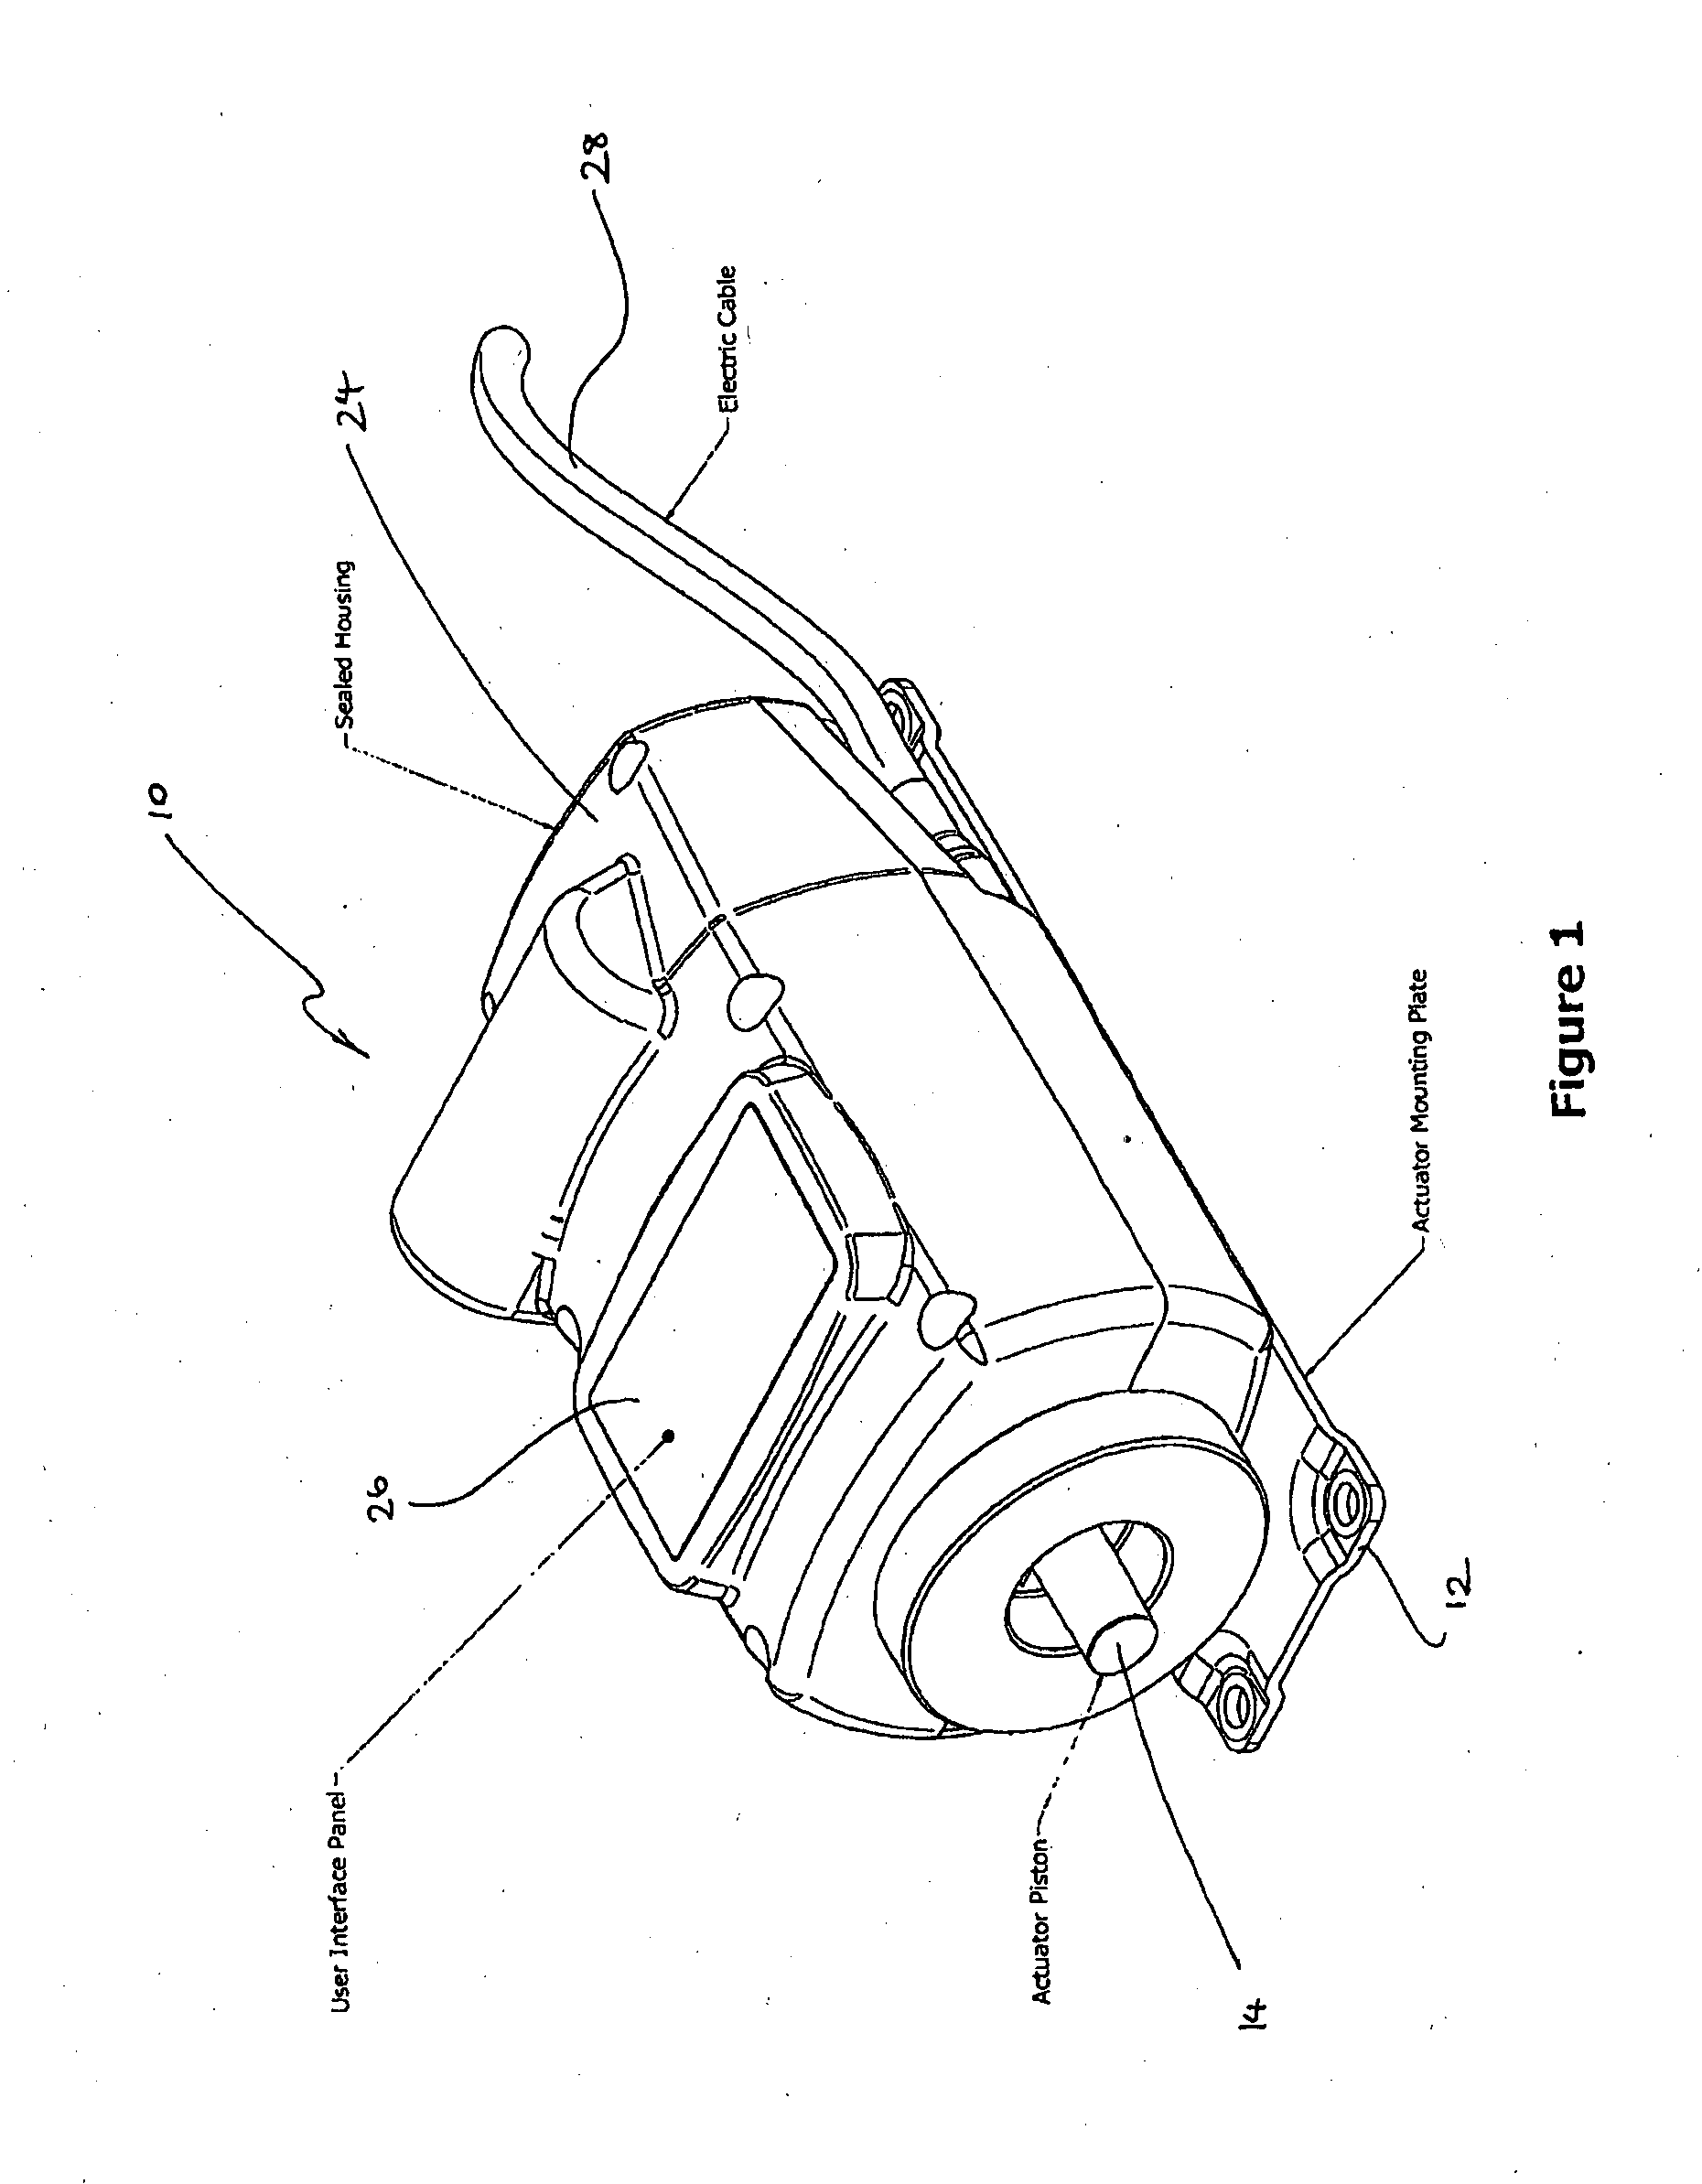 Brake actuation device